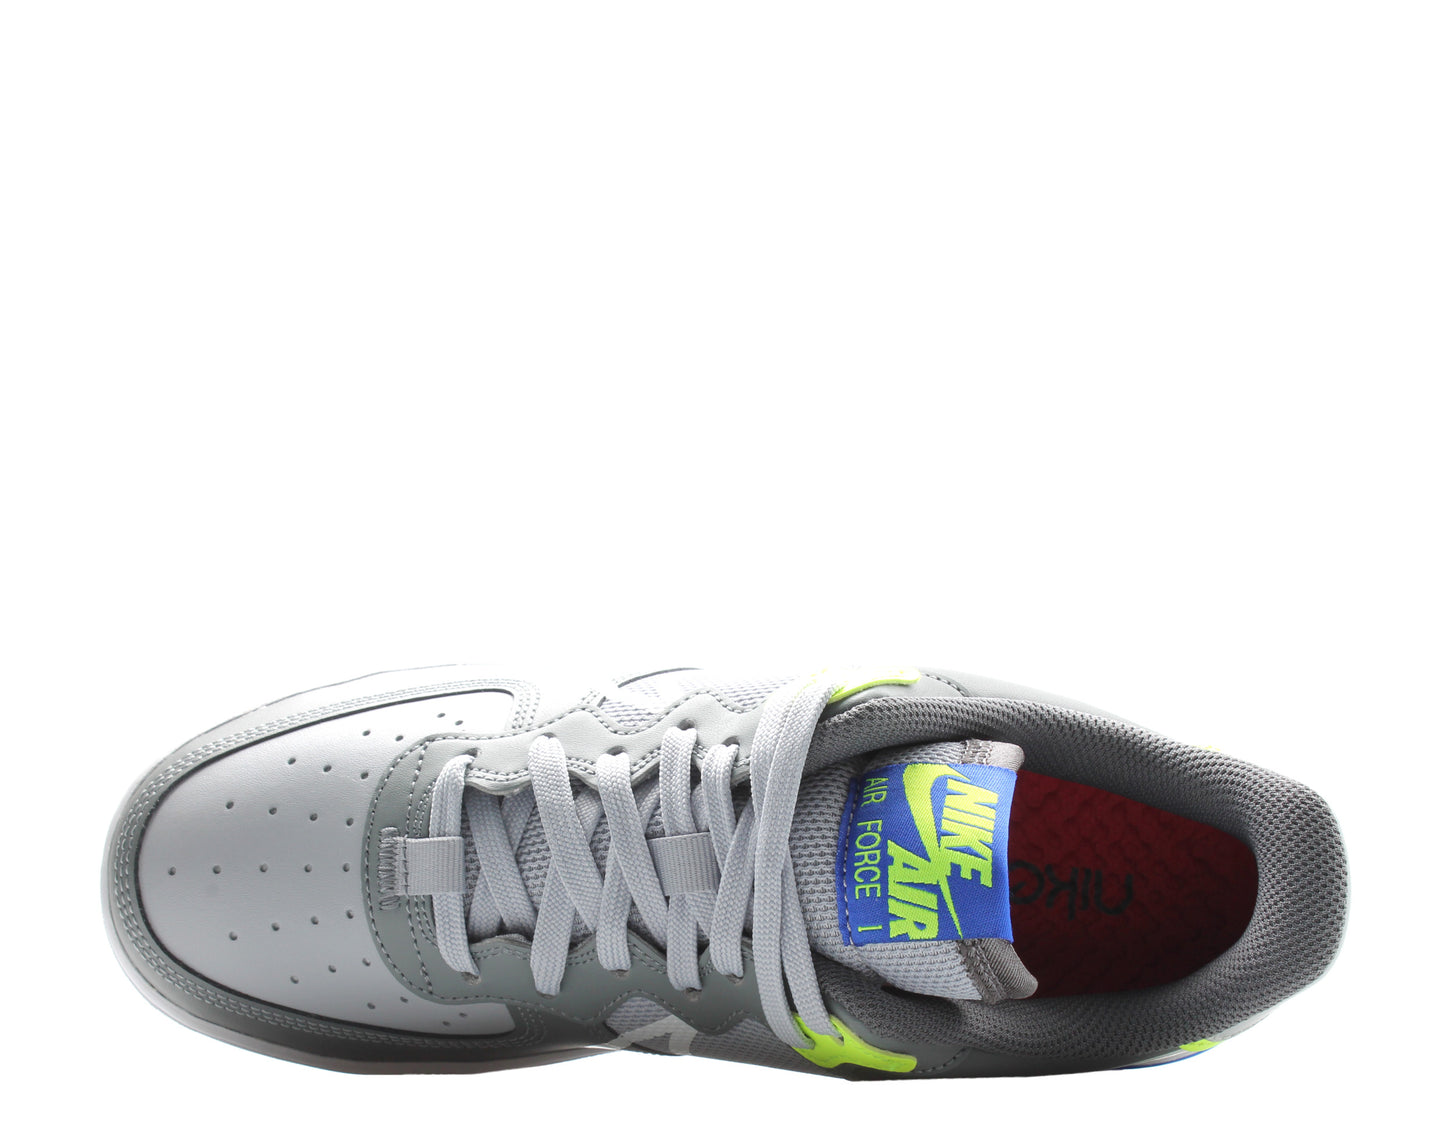 Nike Air Force 1 React Men's Basketball Shoes